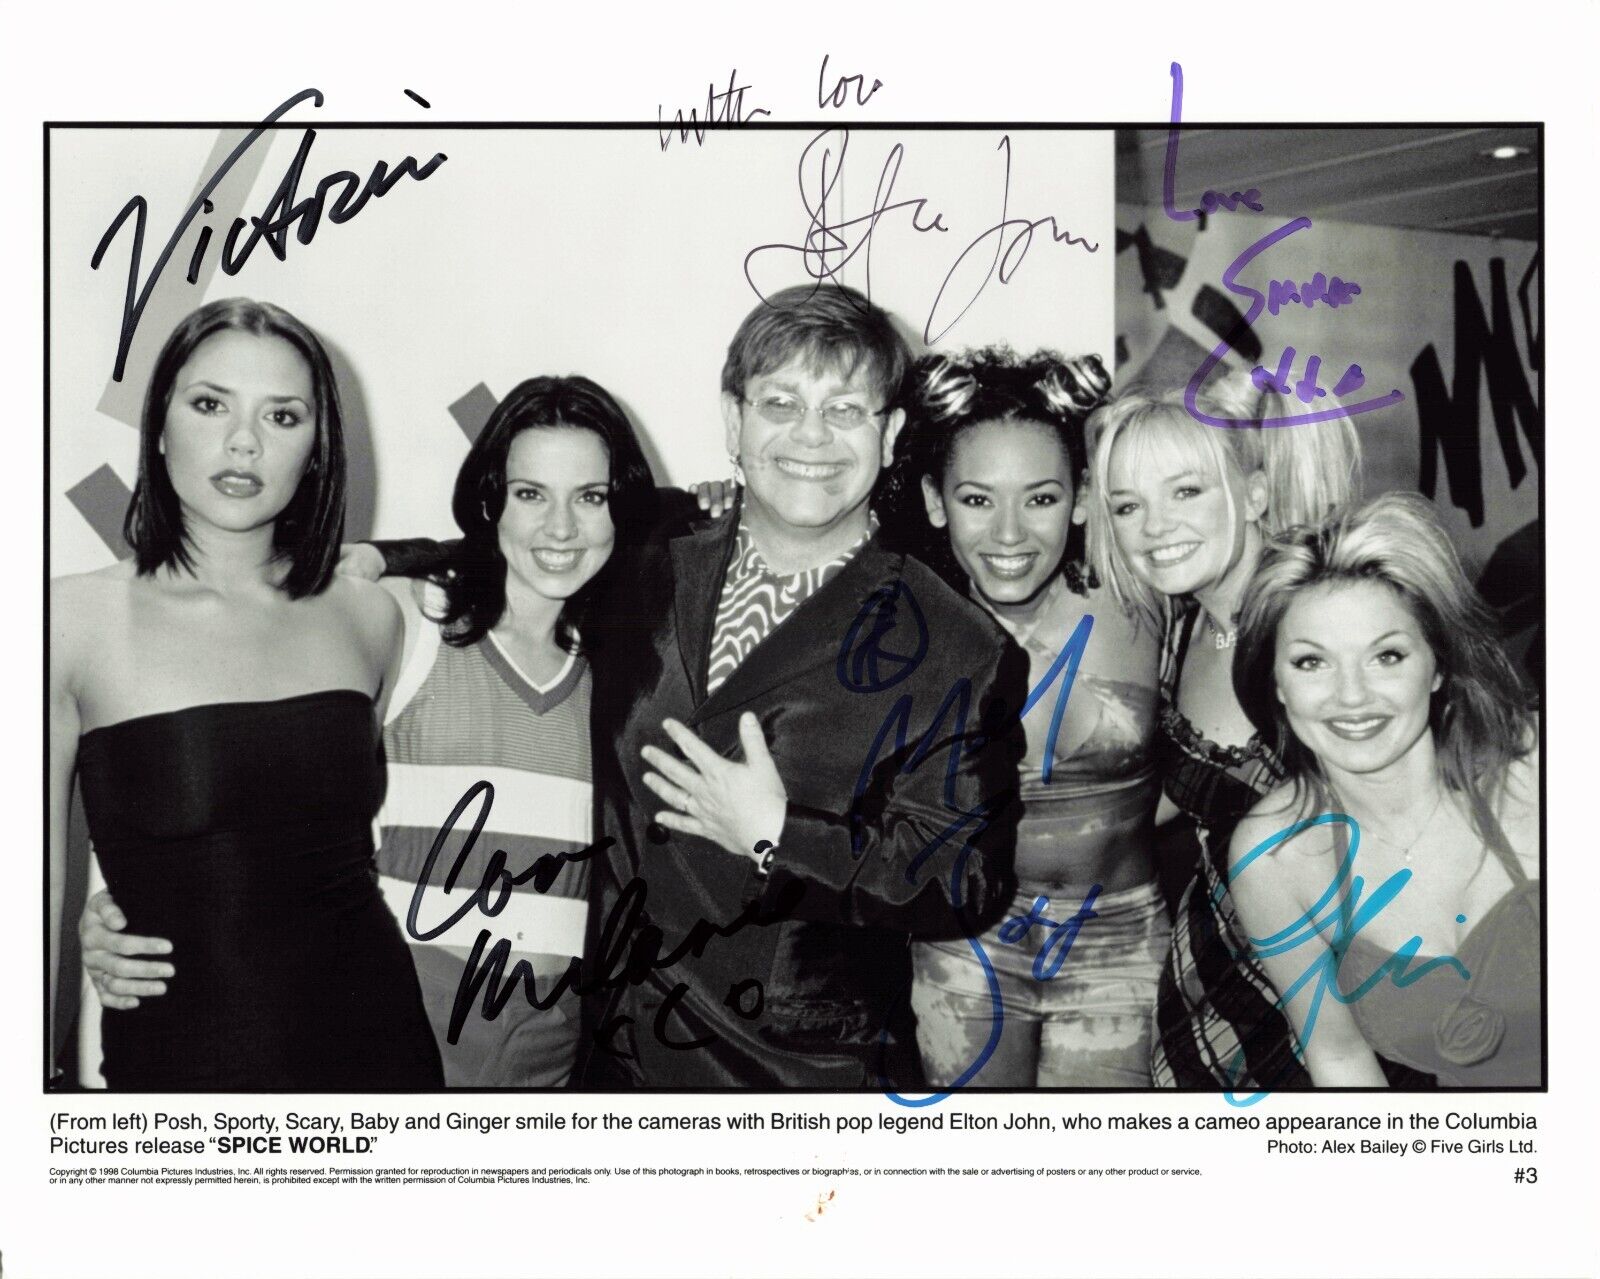 Elton John & The Spice Girls 6x Signed 8x10 Photo Autographed